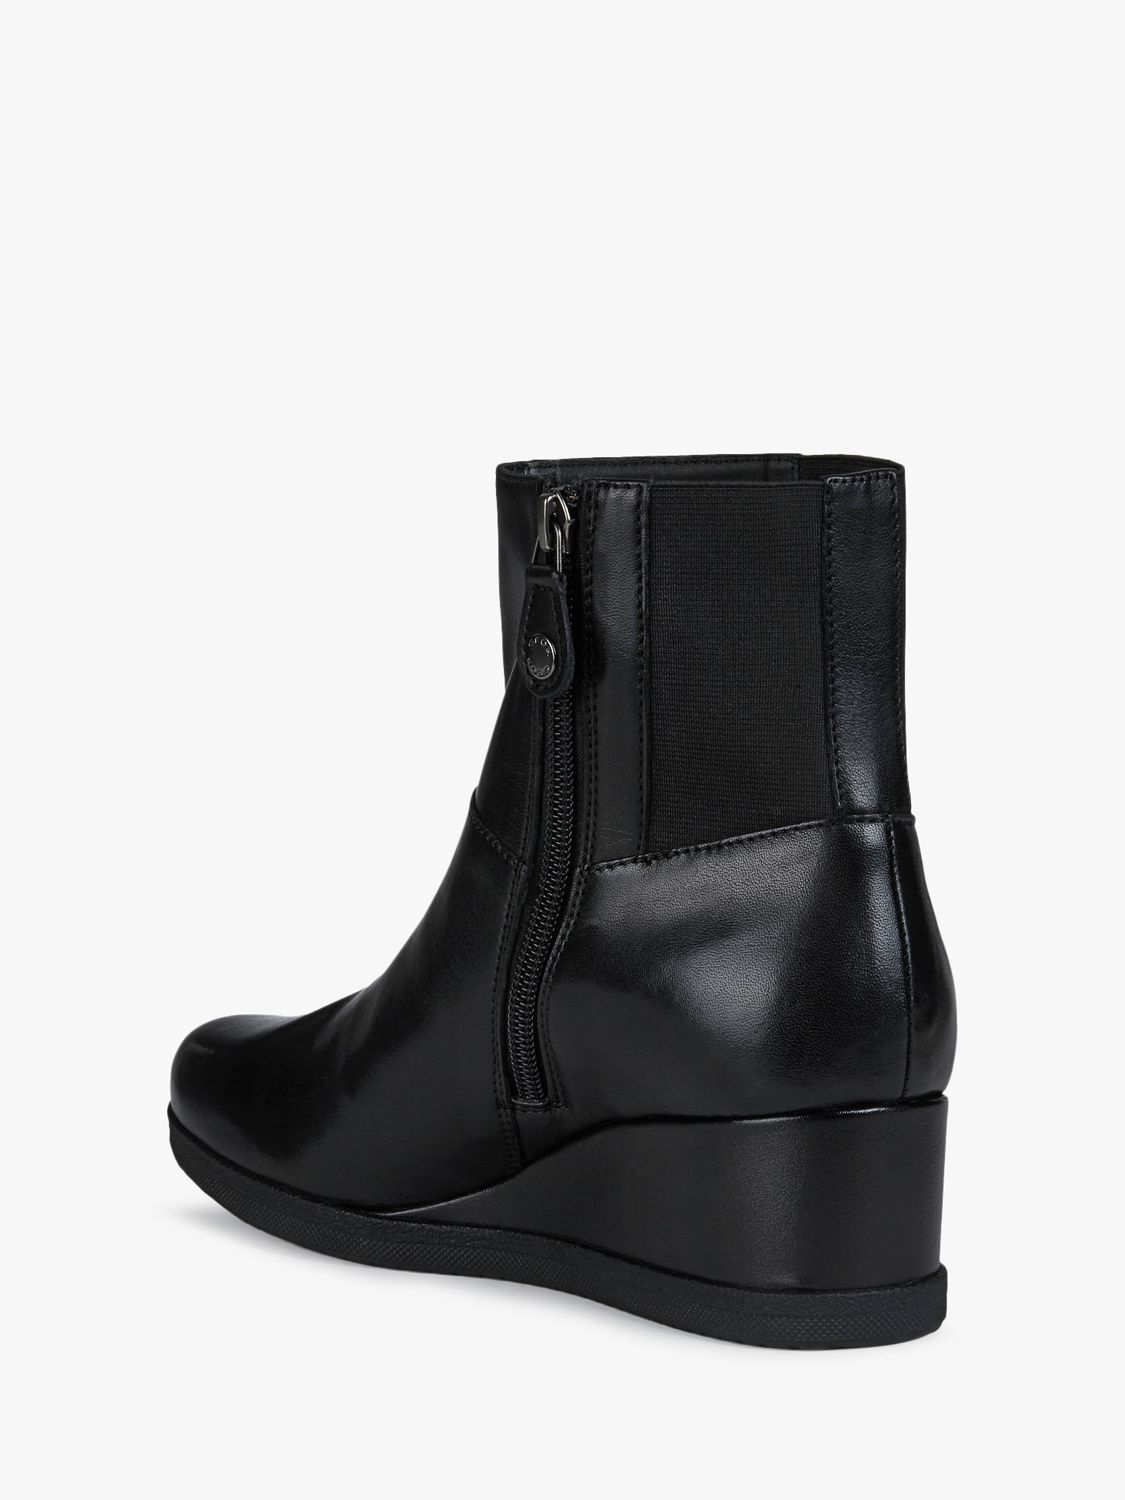 Buy Geox Women's Anylla Leather Wedge Heel Boots, Black Online at johnlewis.com